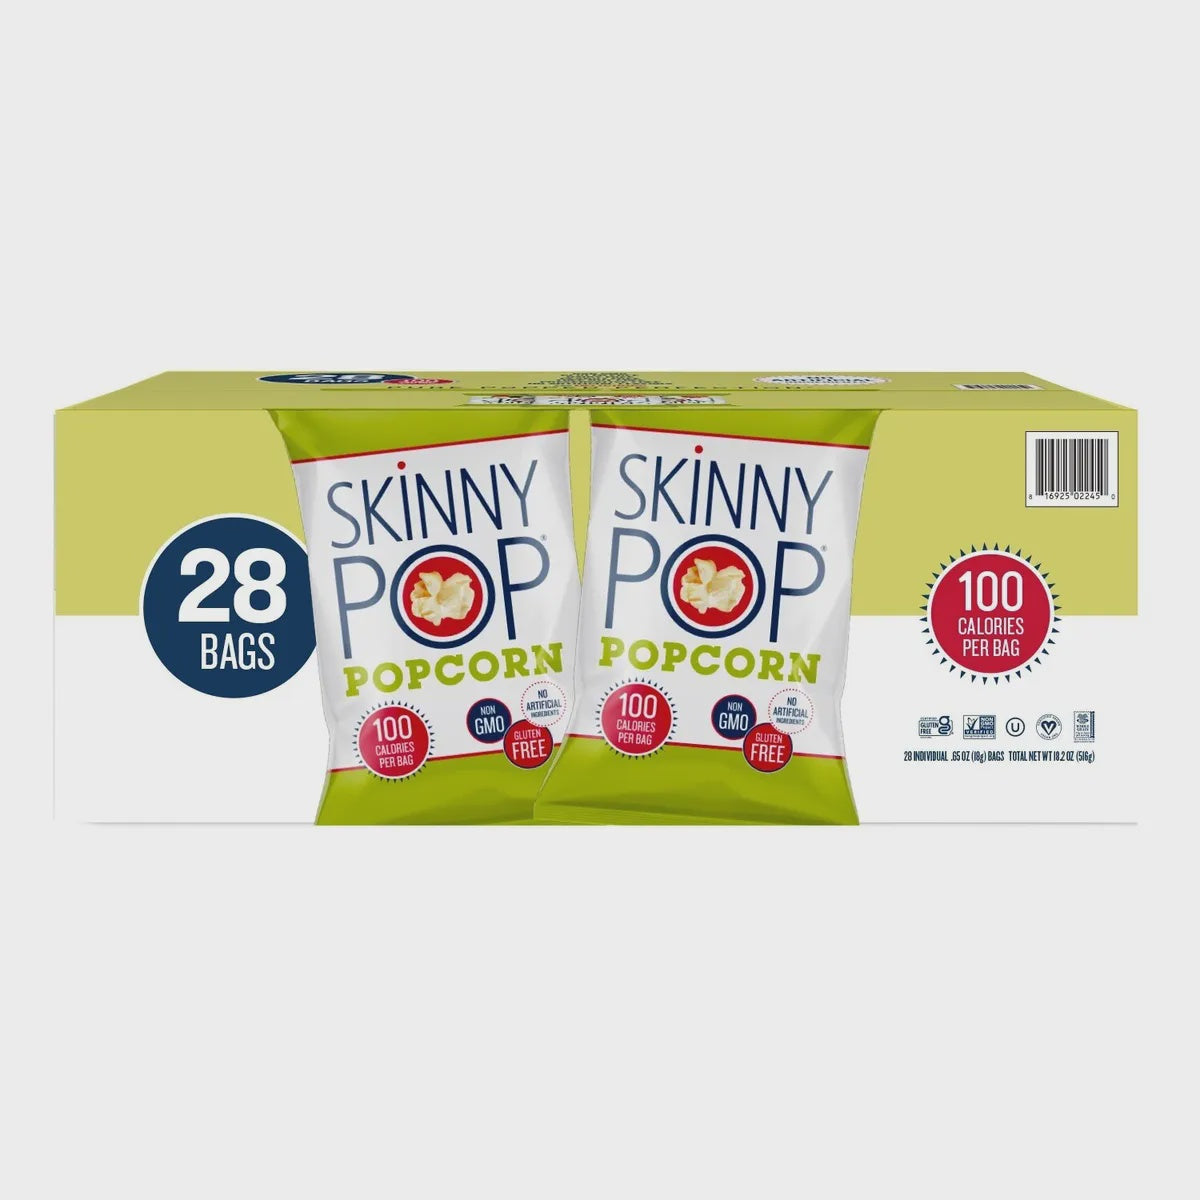 Skinny Pop Popcorn Snack bags - 28 count